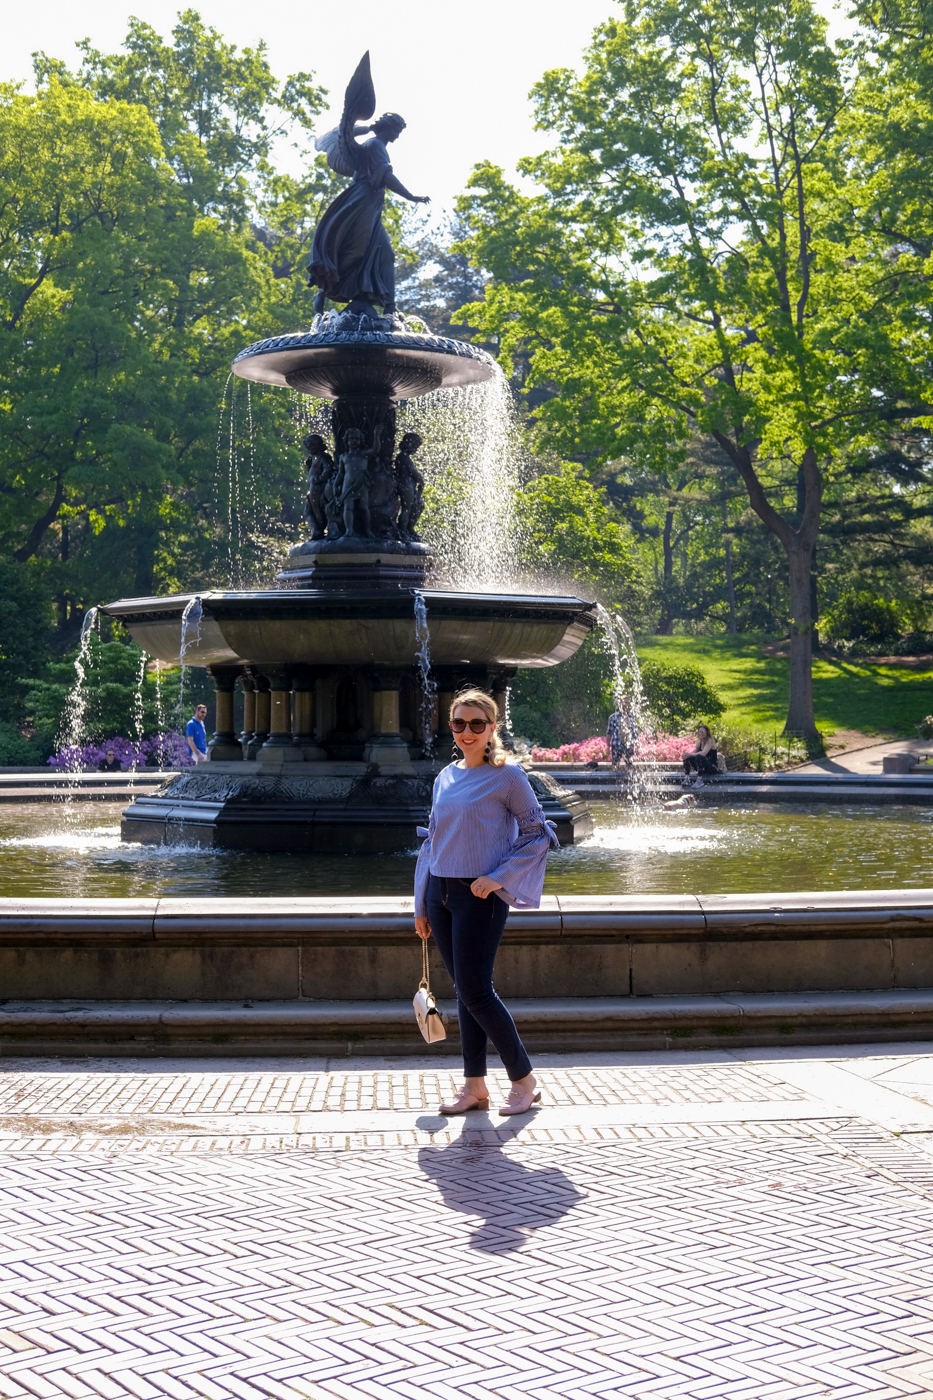 bethesda fountain, Debora Dahl, Central Park